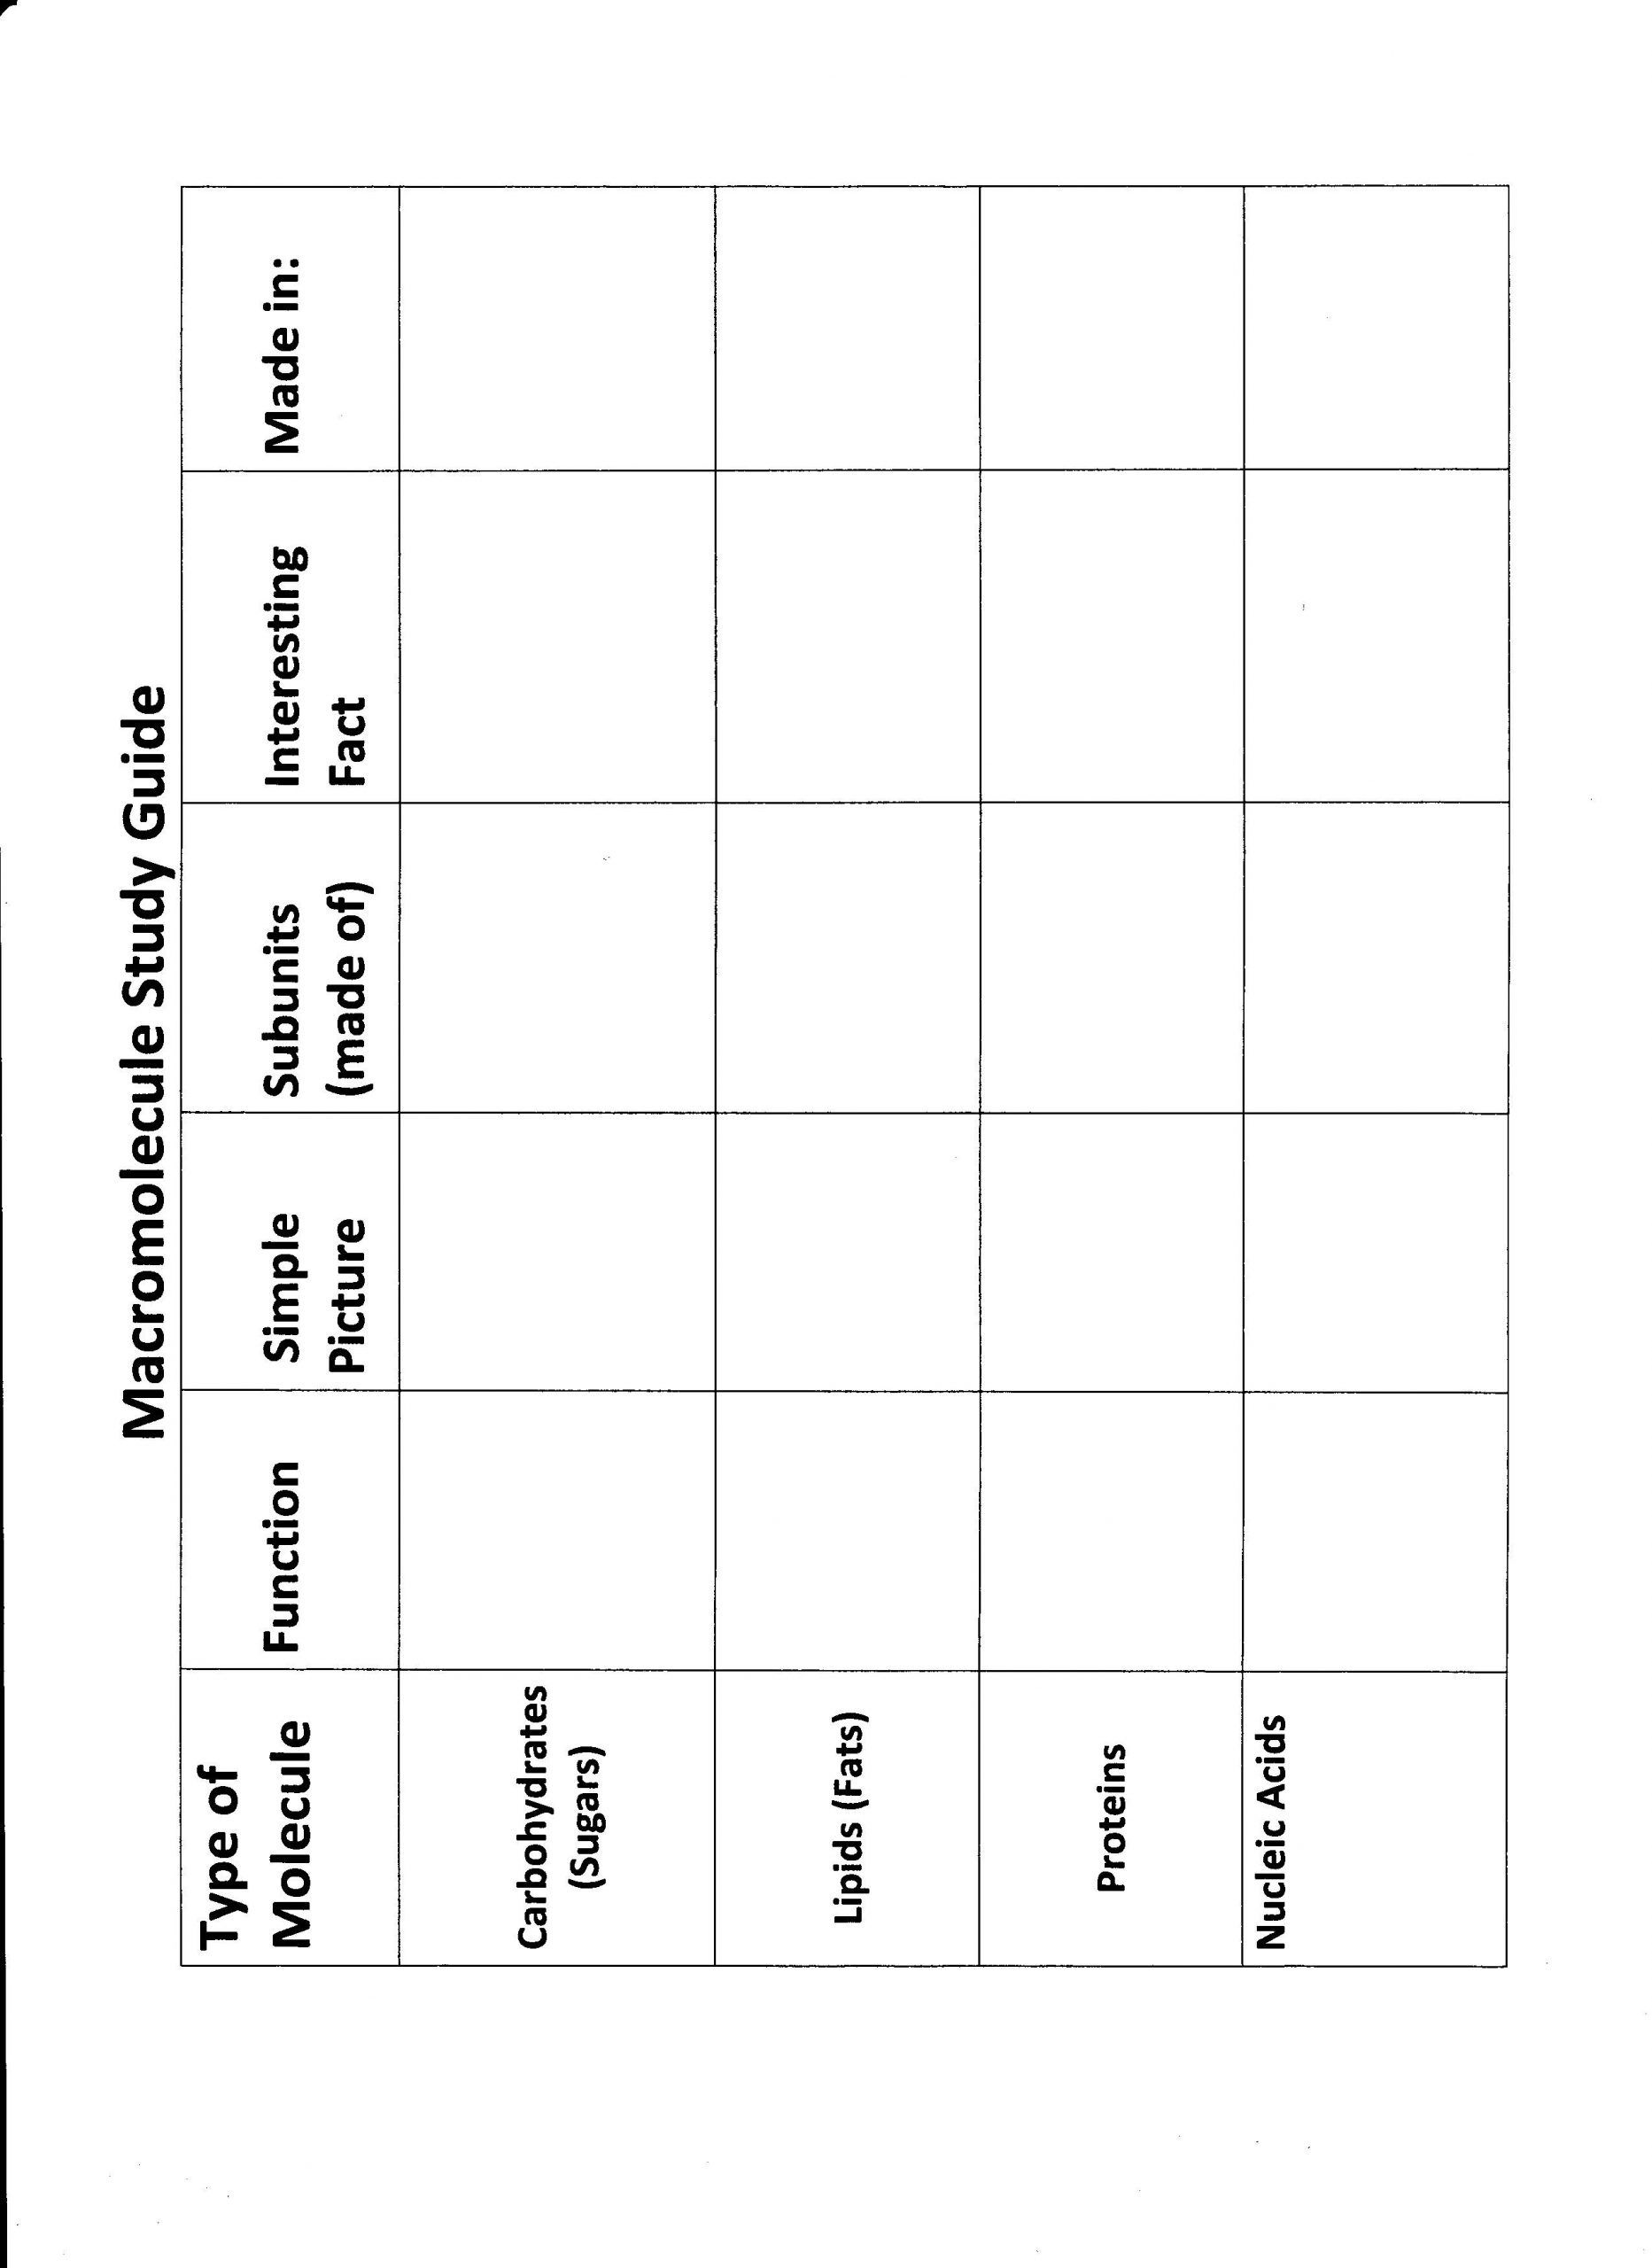 Macromolecules Worksheet 2 Answers 29 Macromolecules and Nutrition Label Worksheet Answers